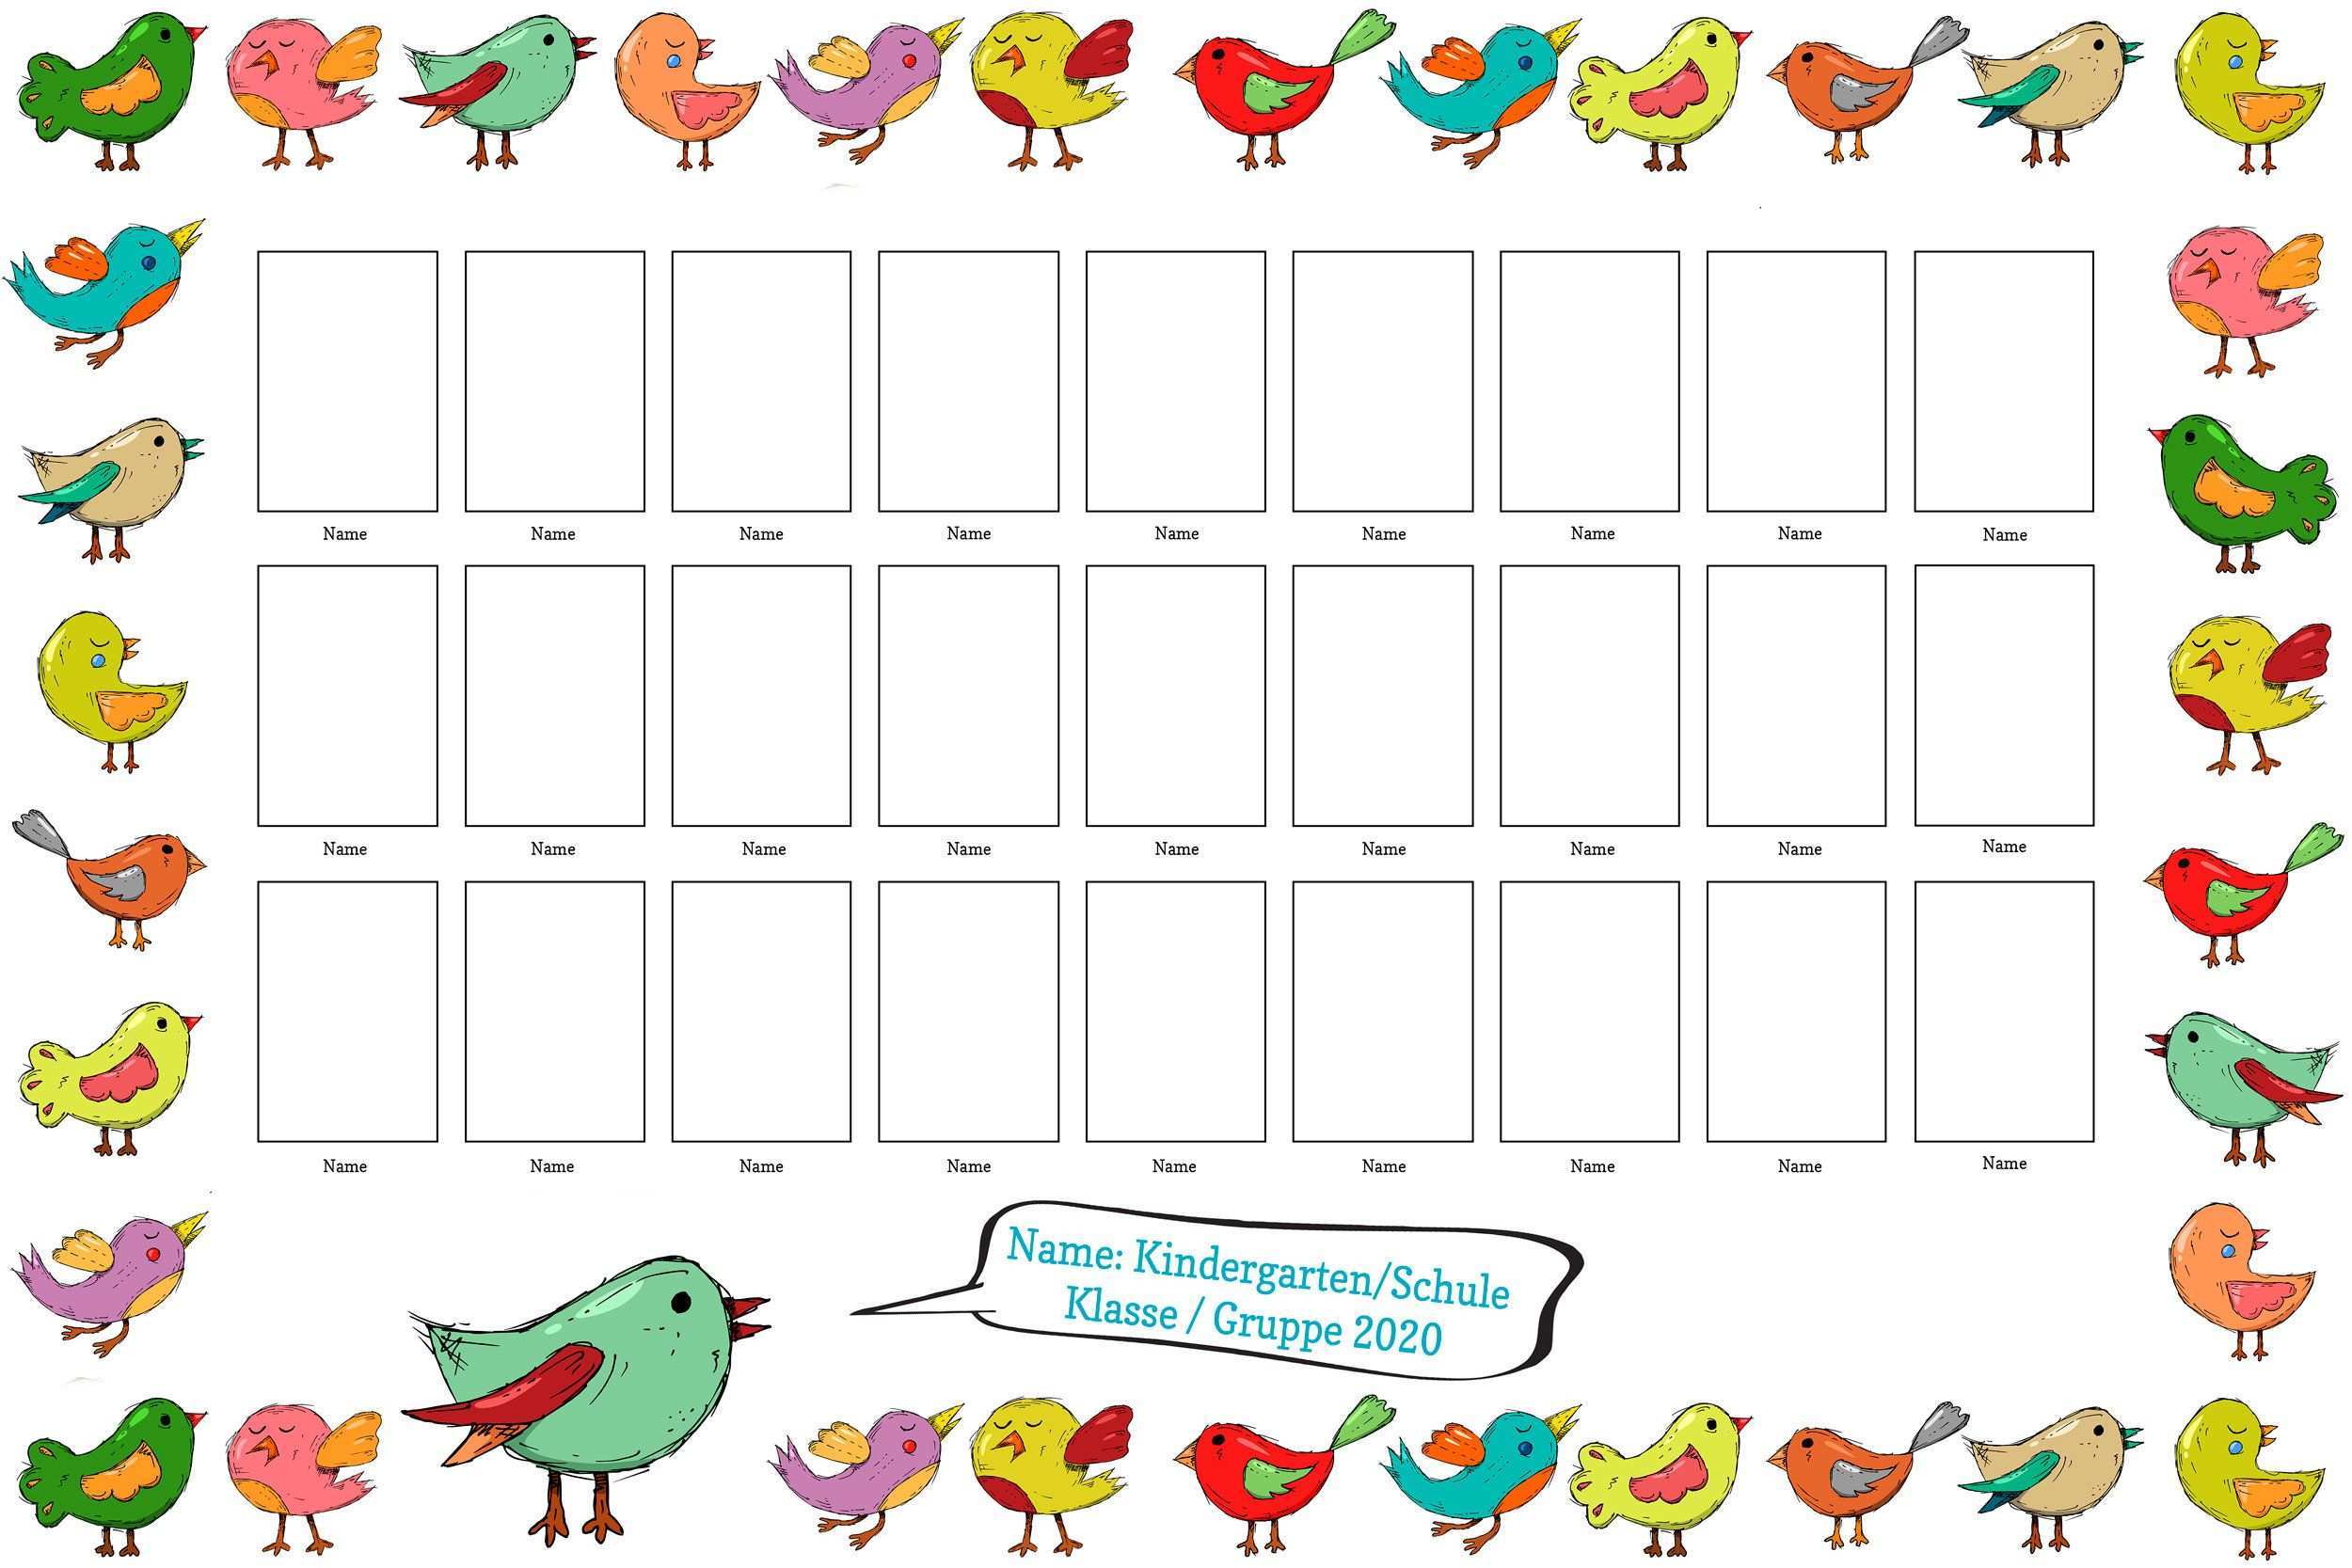 Custom Class Photo Collage Template For School Kindergarten Classroom Layered Psd File Yearbook 8x10 3 2 Instant Download Photo Collage Template Collage Template Photo Collage